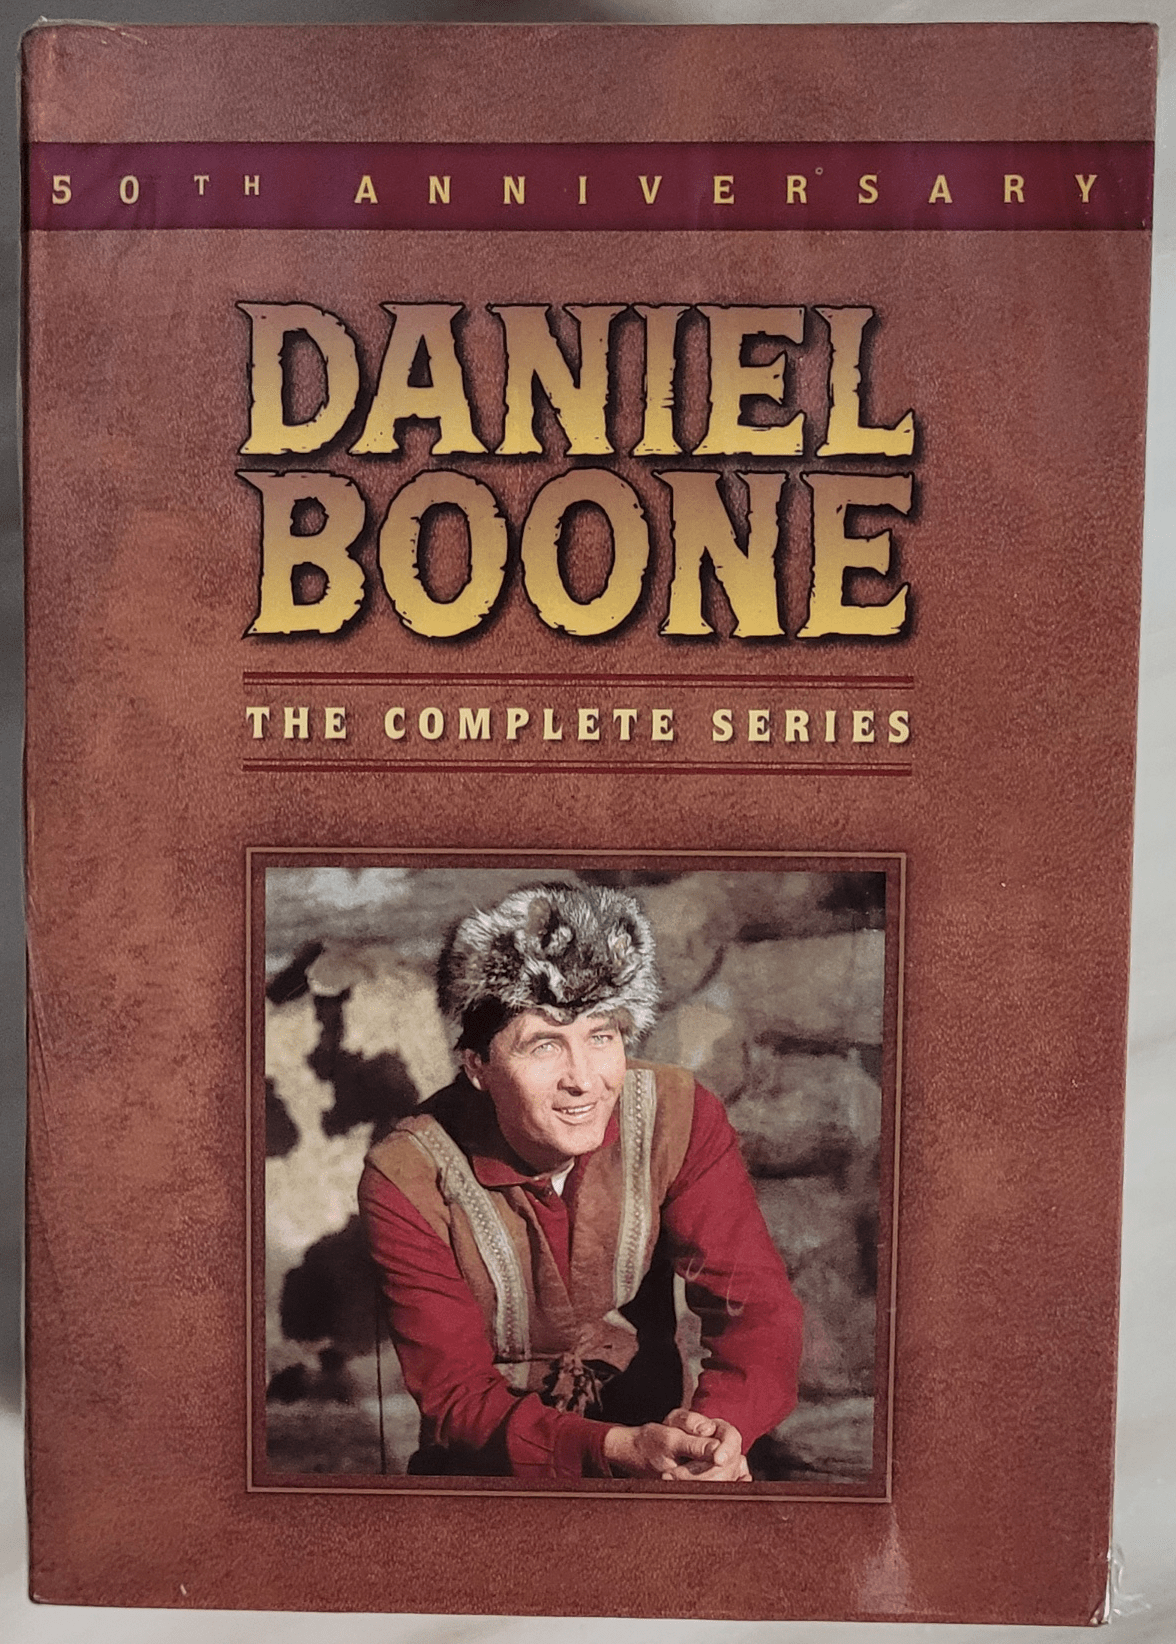 Daniel Boone TV series - DVD Front View